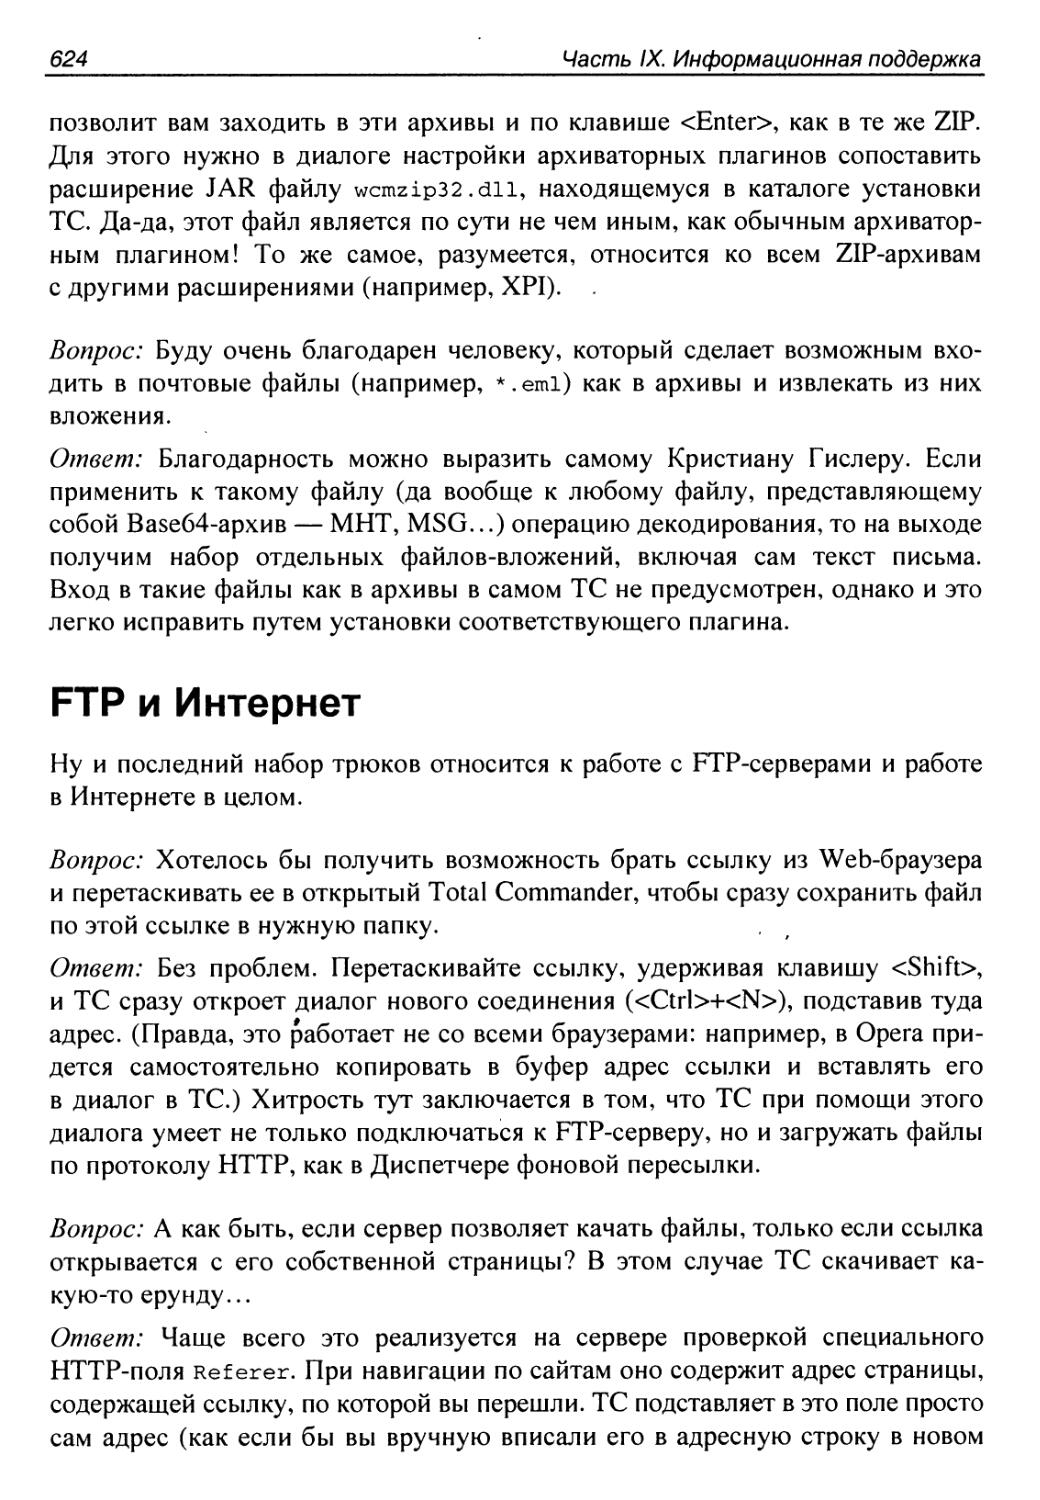 FTP и Интернет